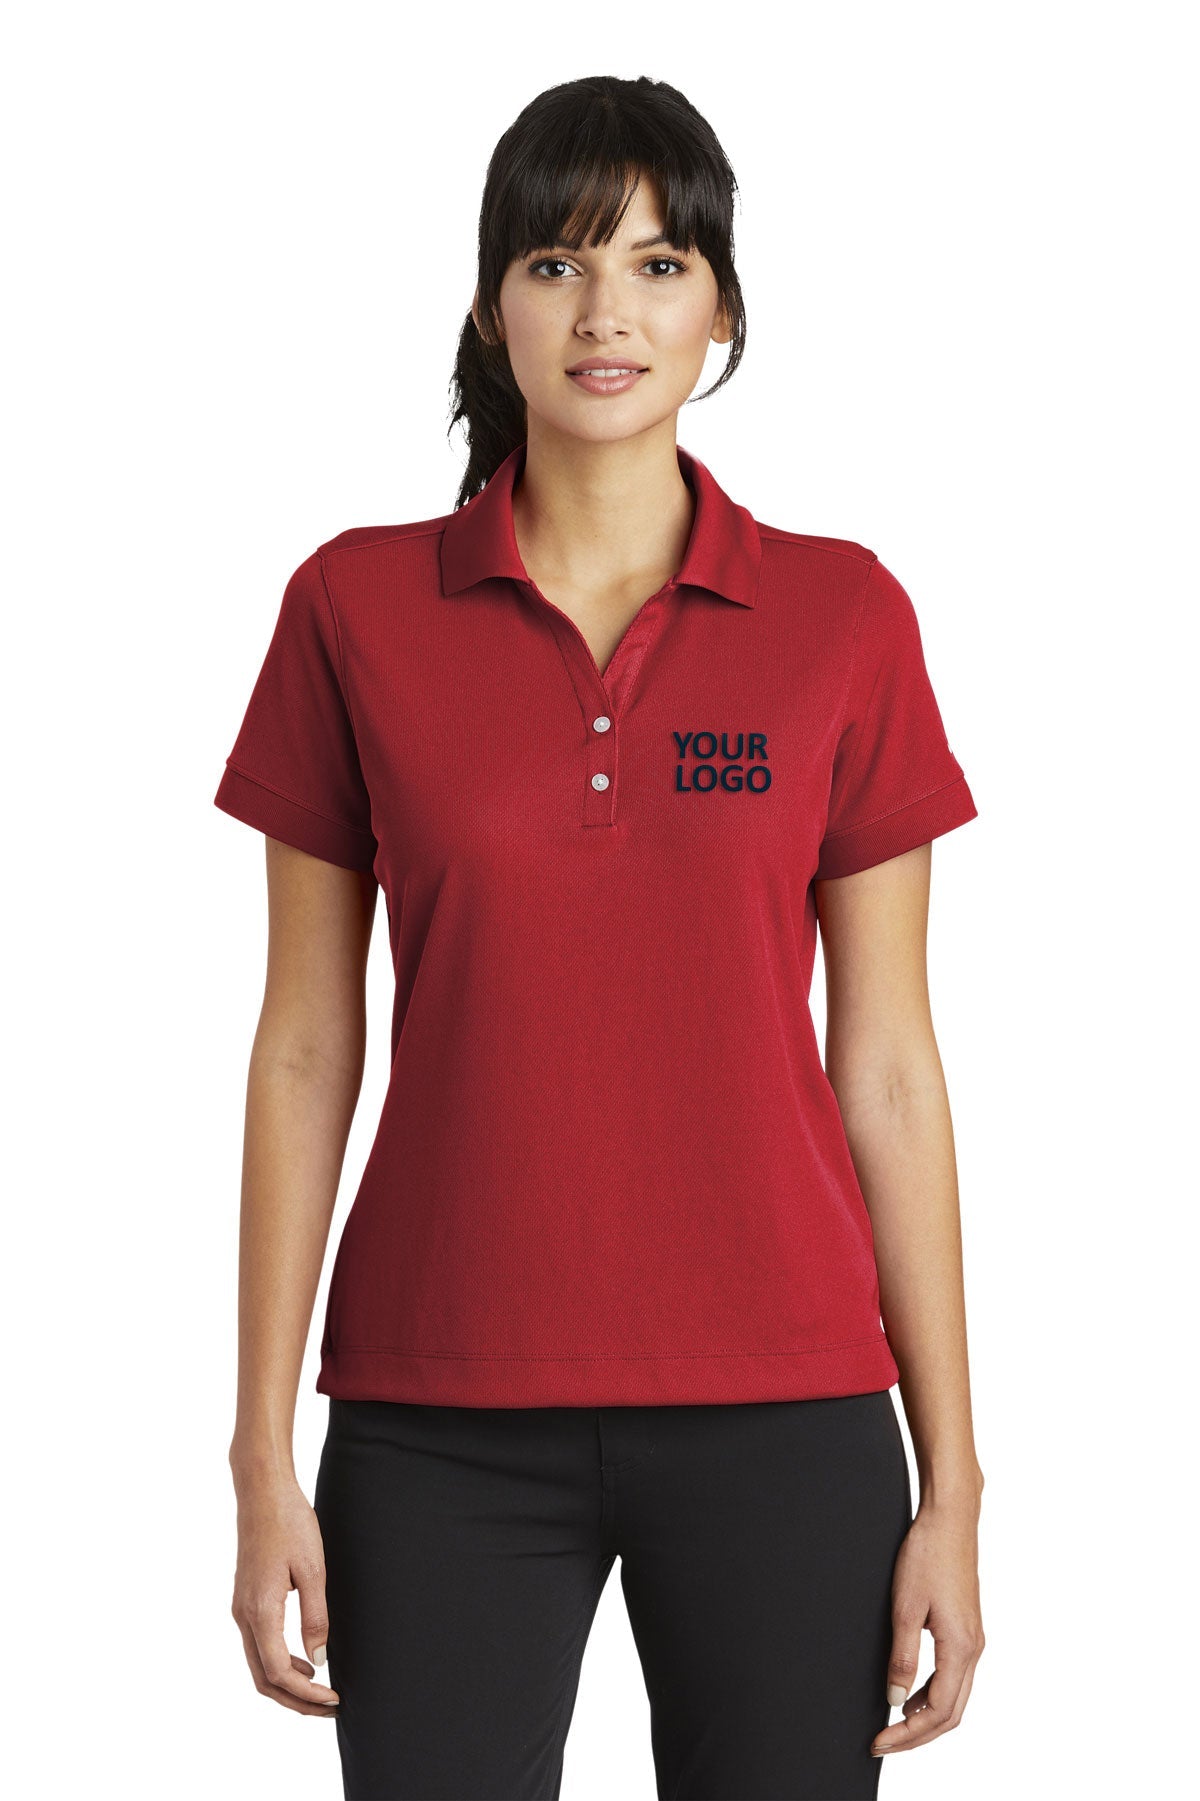 nike varsity red 286772 custom polo shirts for work